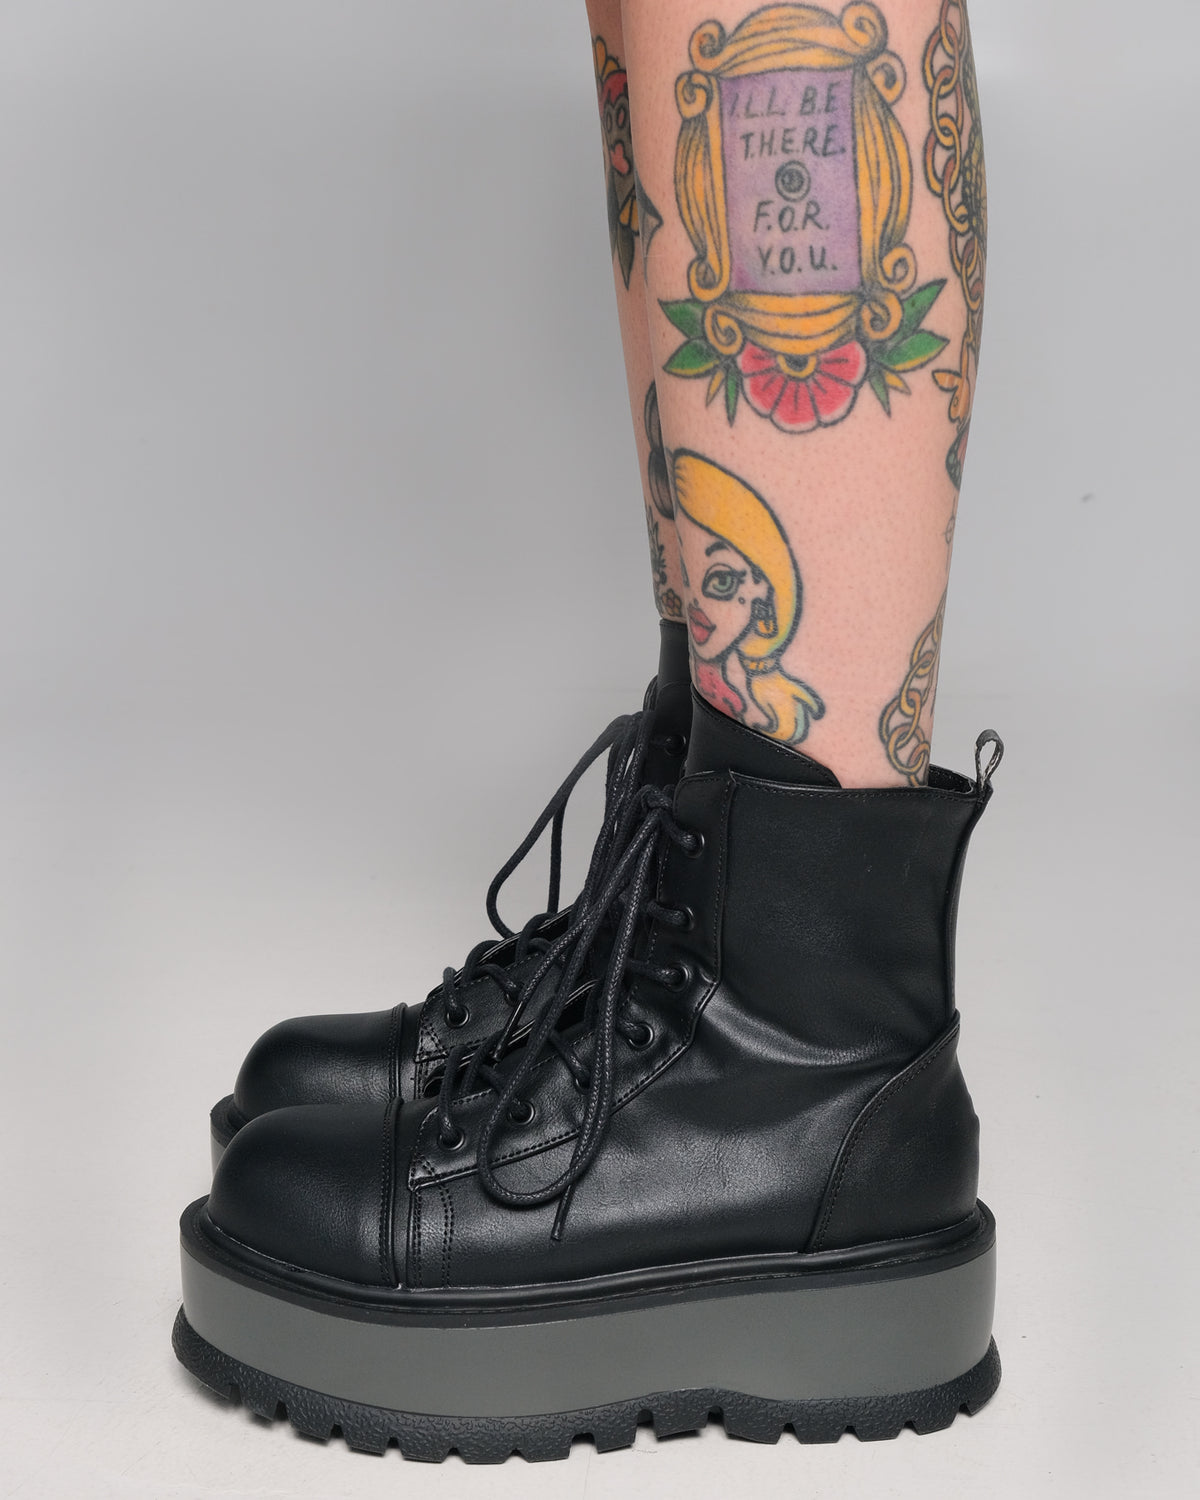 Demonia Slacker Black Combat Ankle Boots